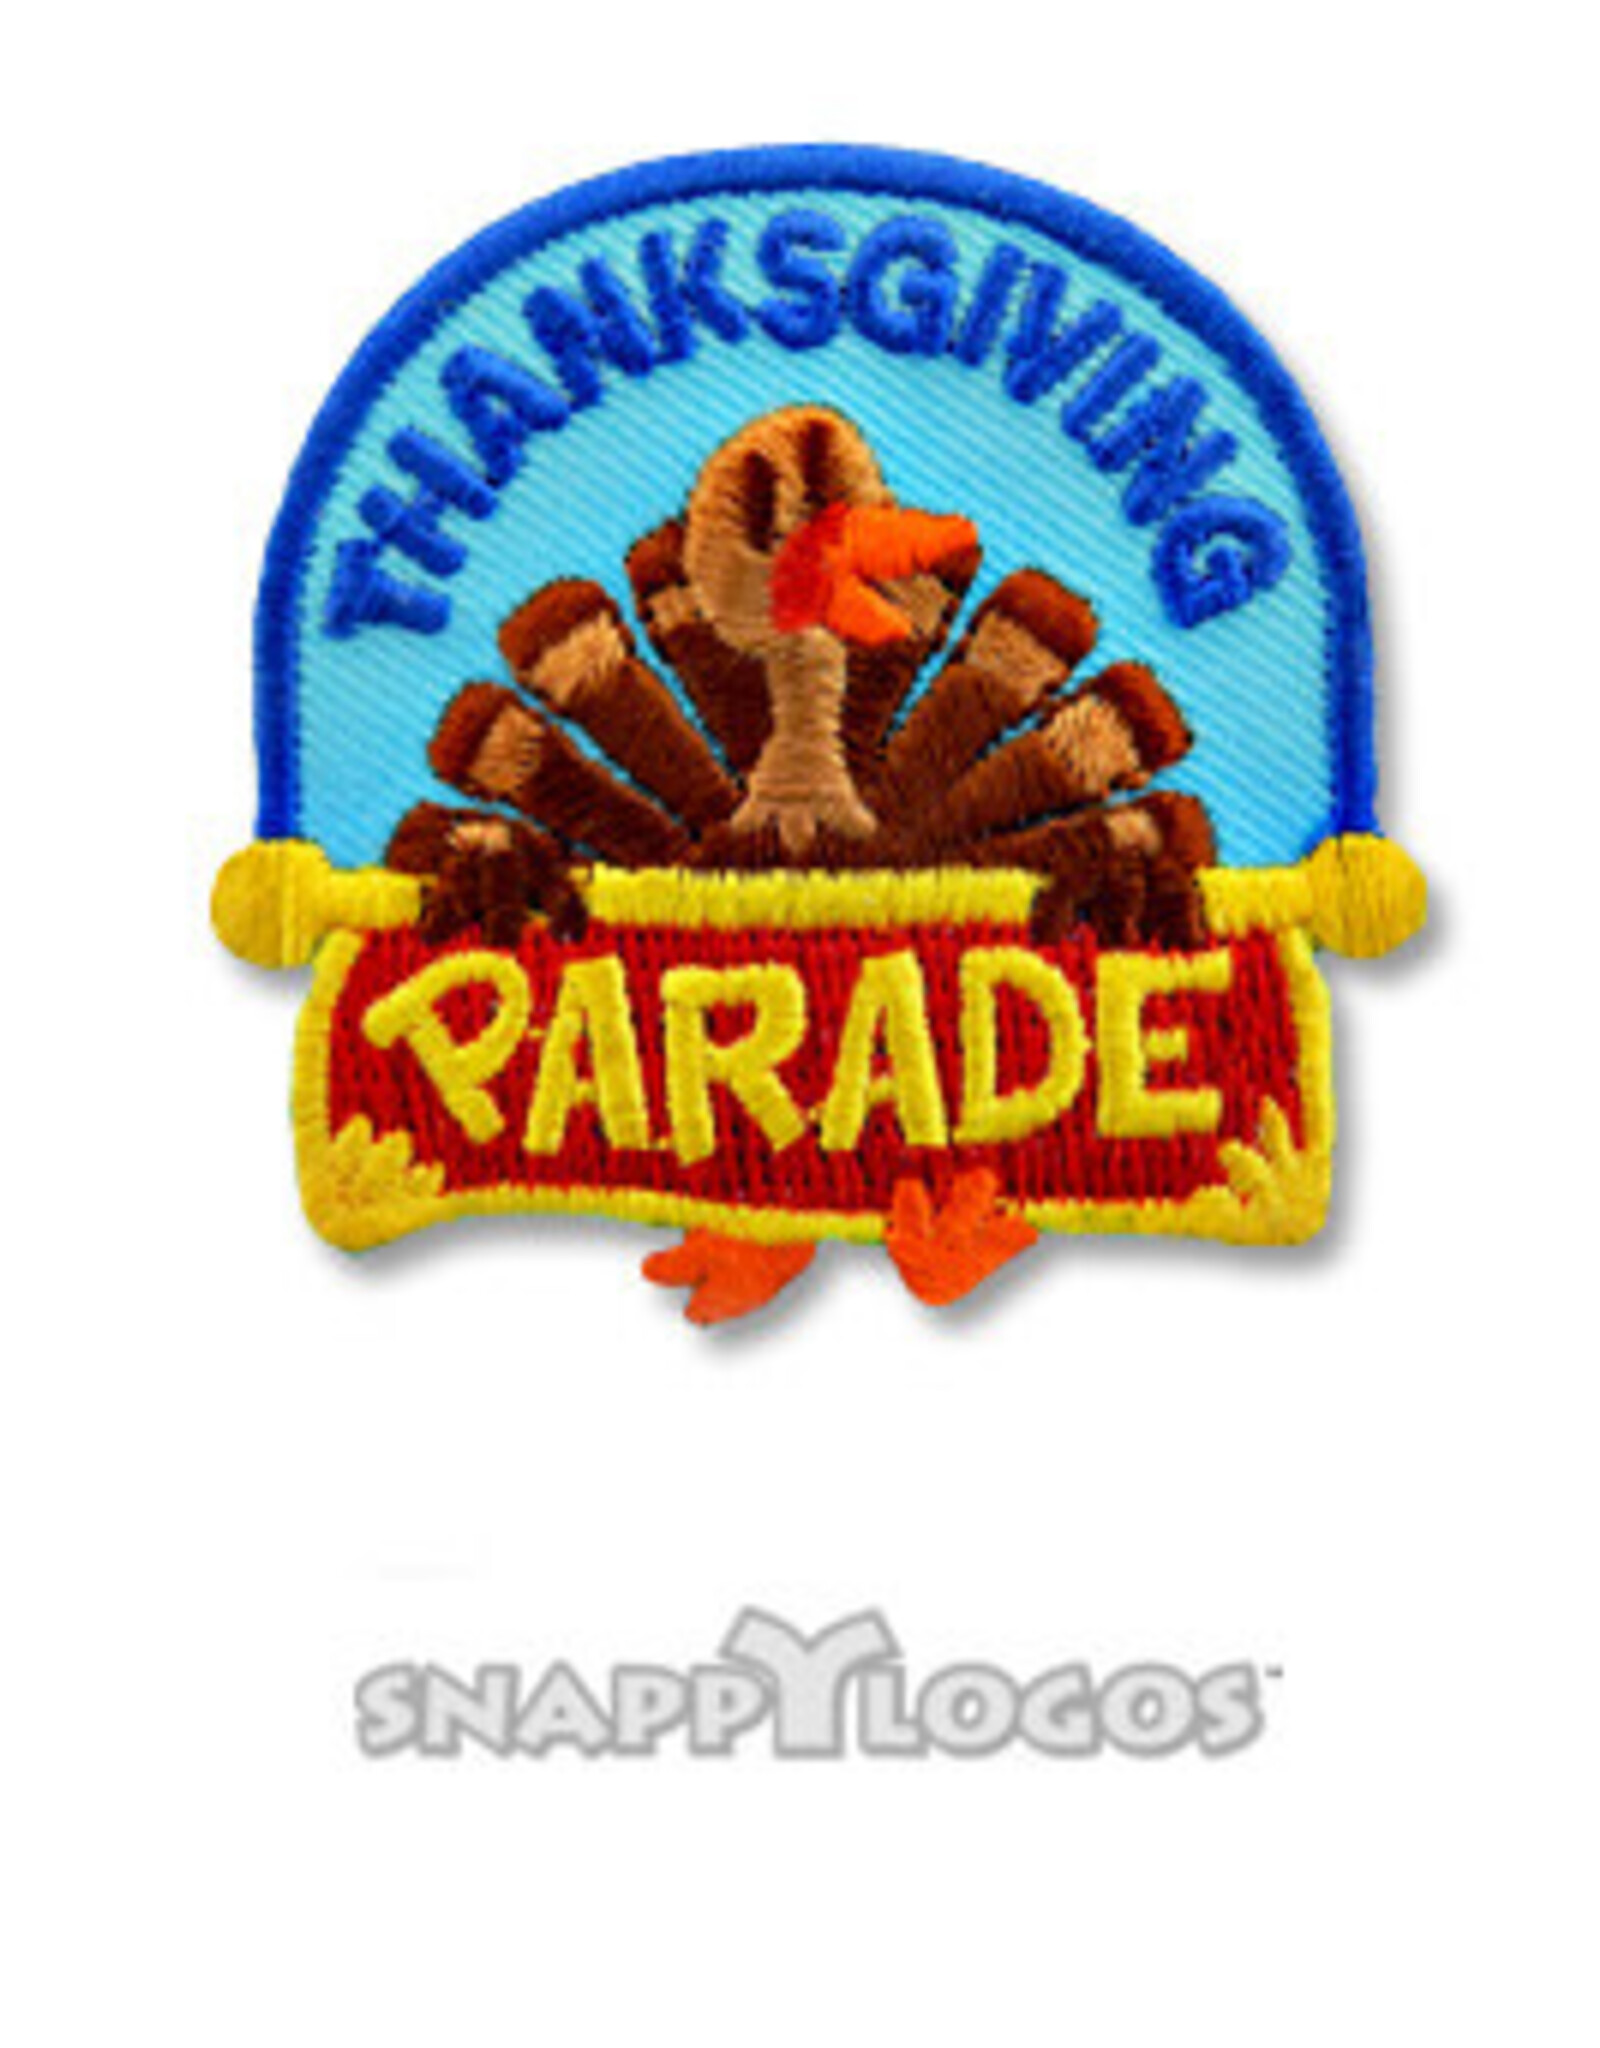 Thanksgiving Parade Fun Patch (6475)